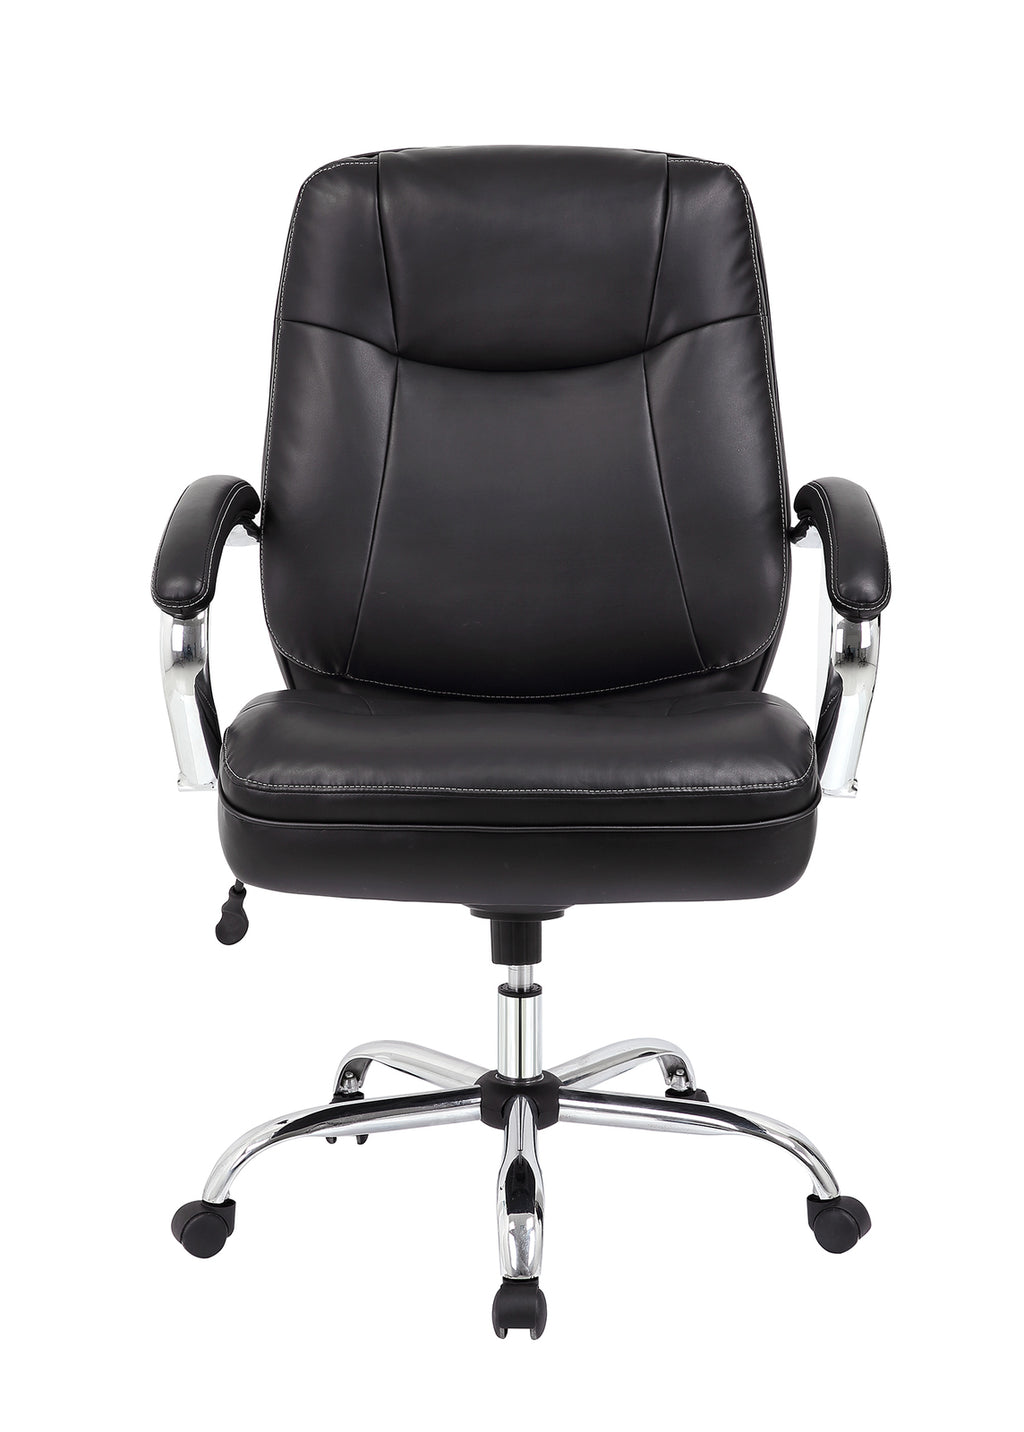 Ergolux Max XL - Office Chair